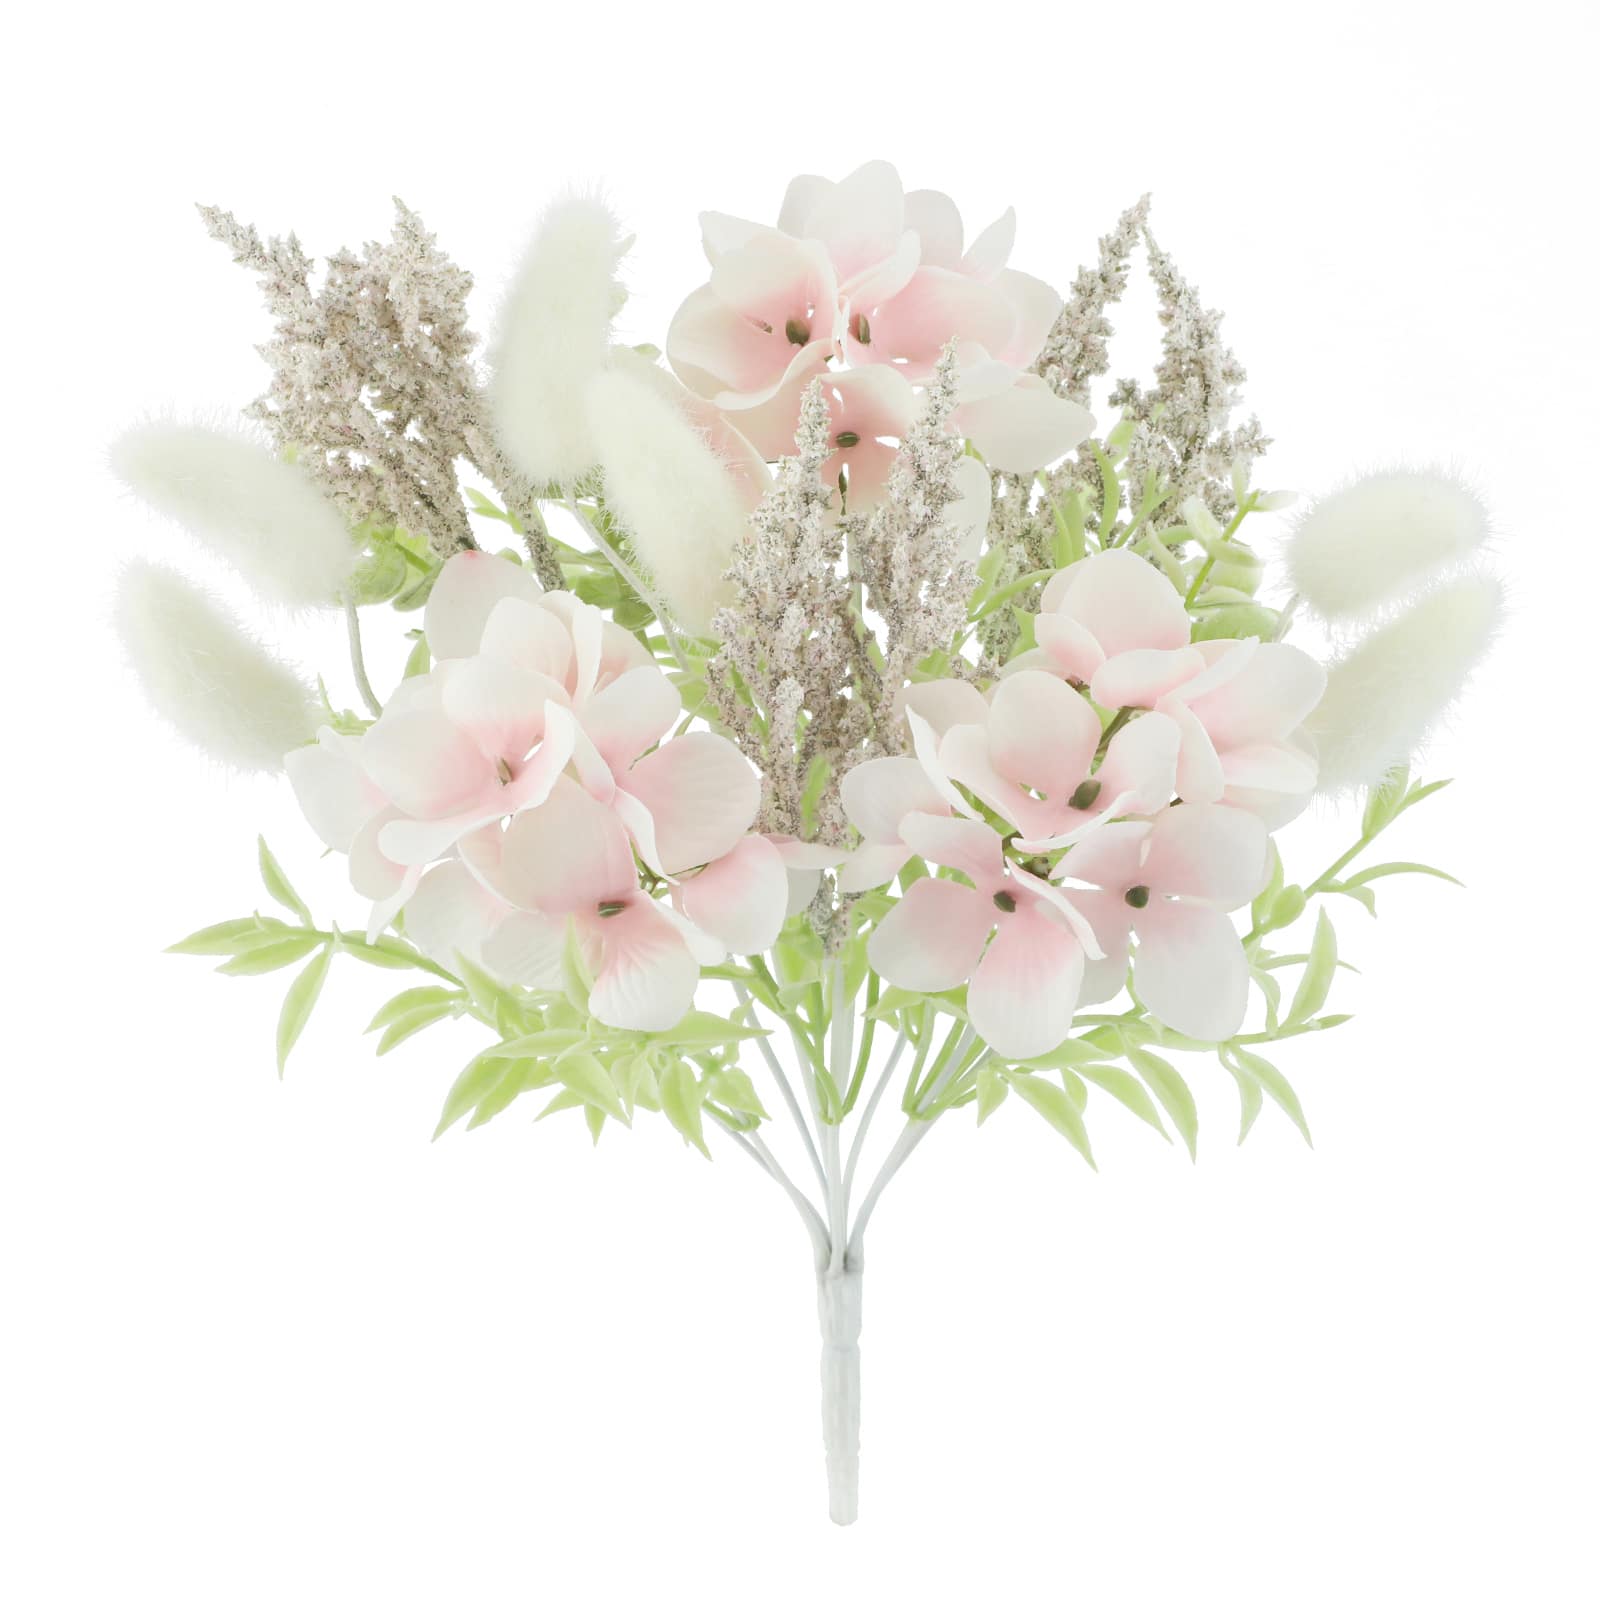 Cream &#x26; Pink Mixed Bunny Tail, Heather &#x26; Hydrangea Bush by Ashland&#xAE;